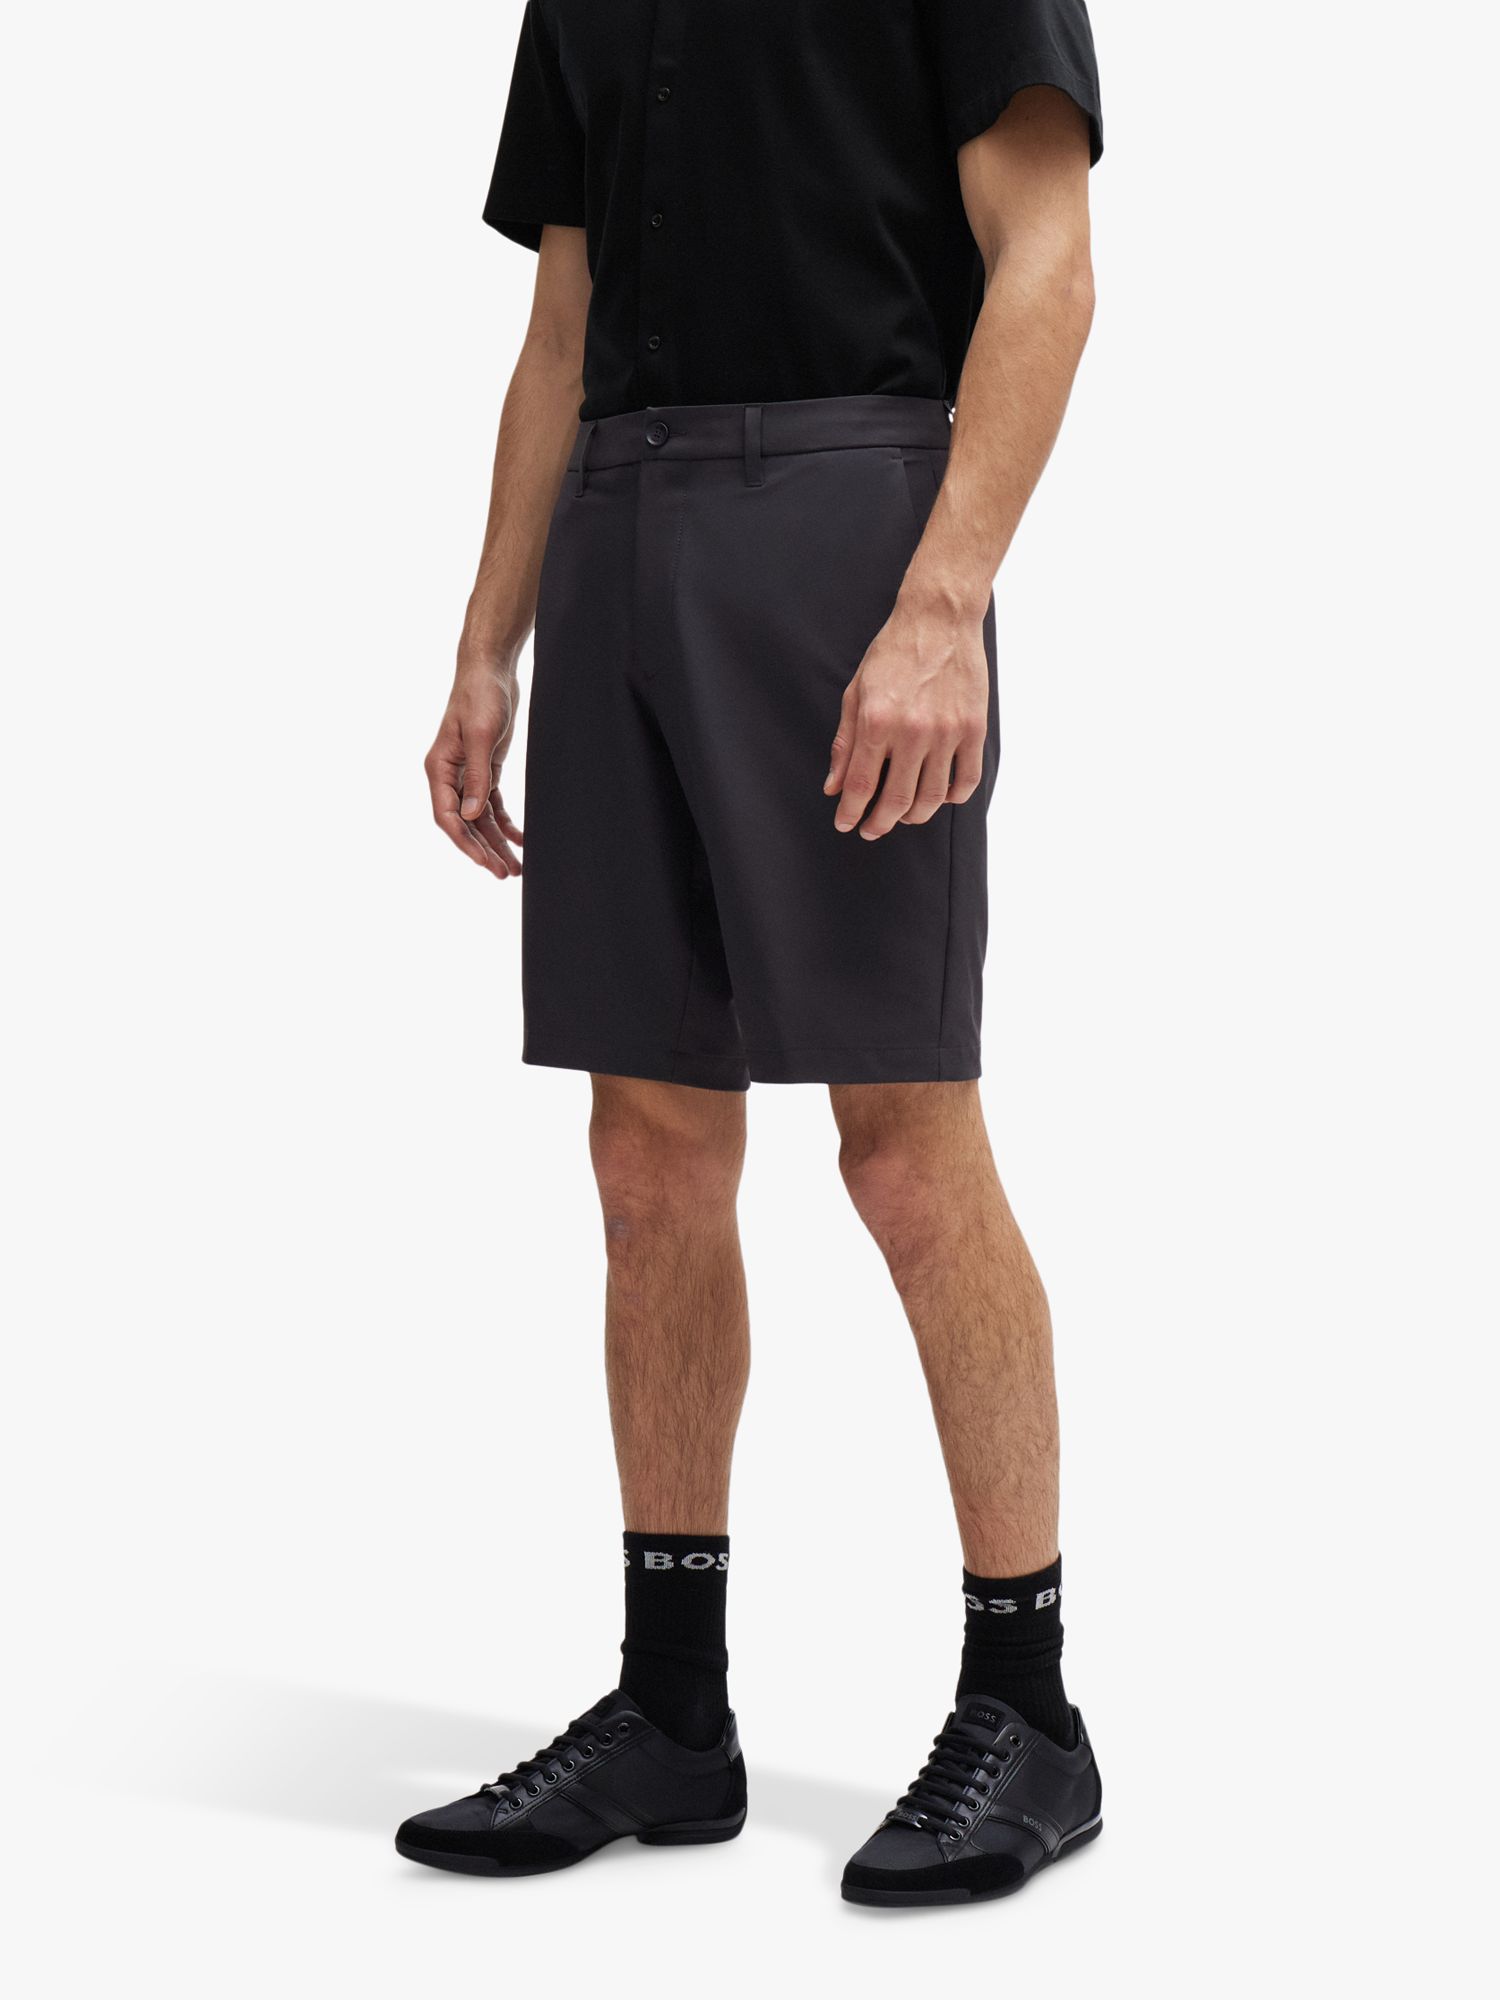 BOSS Commuter Shorts, Charcoal, 42R